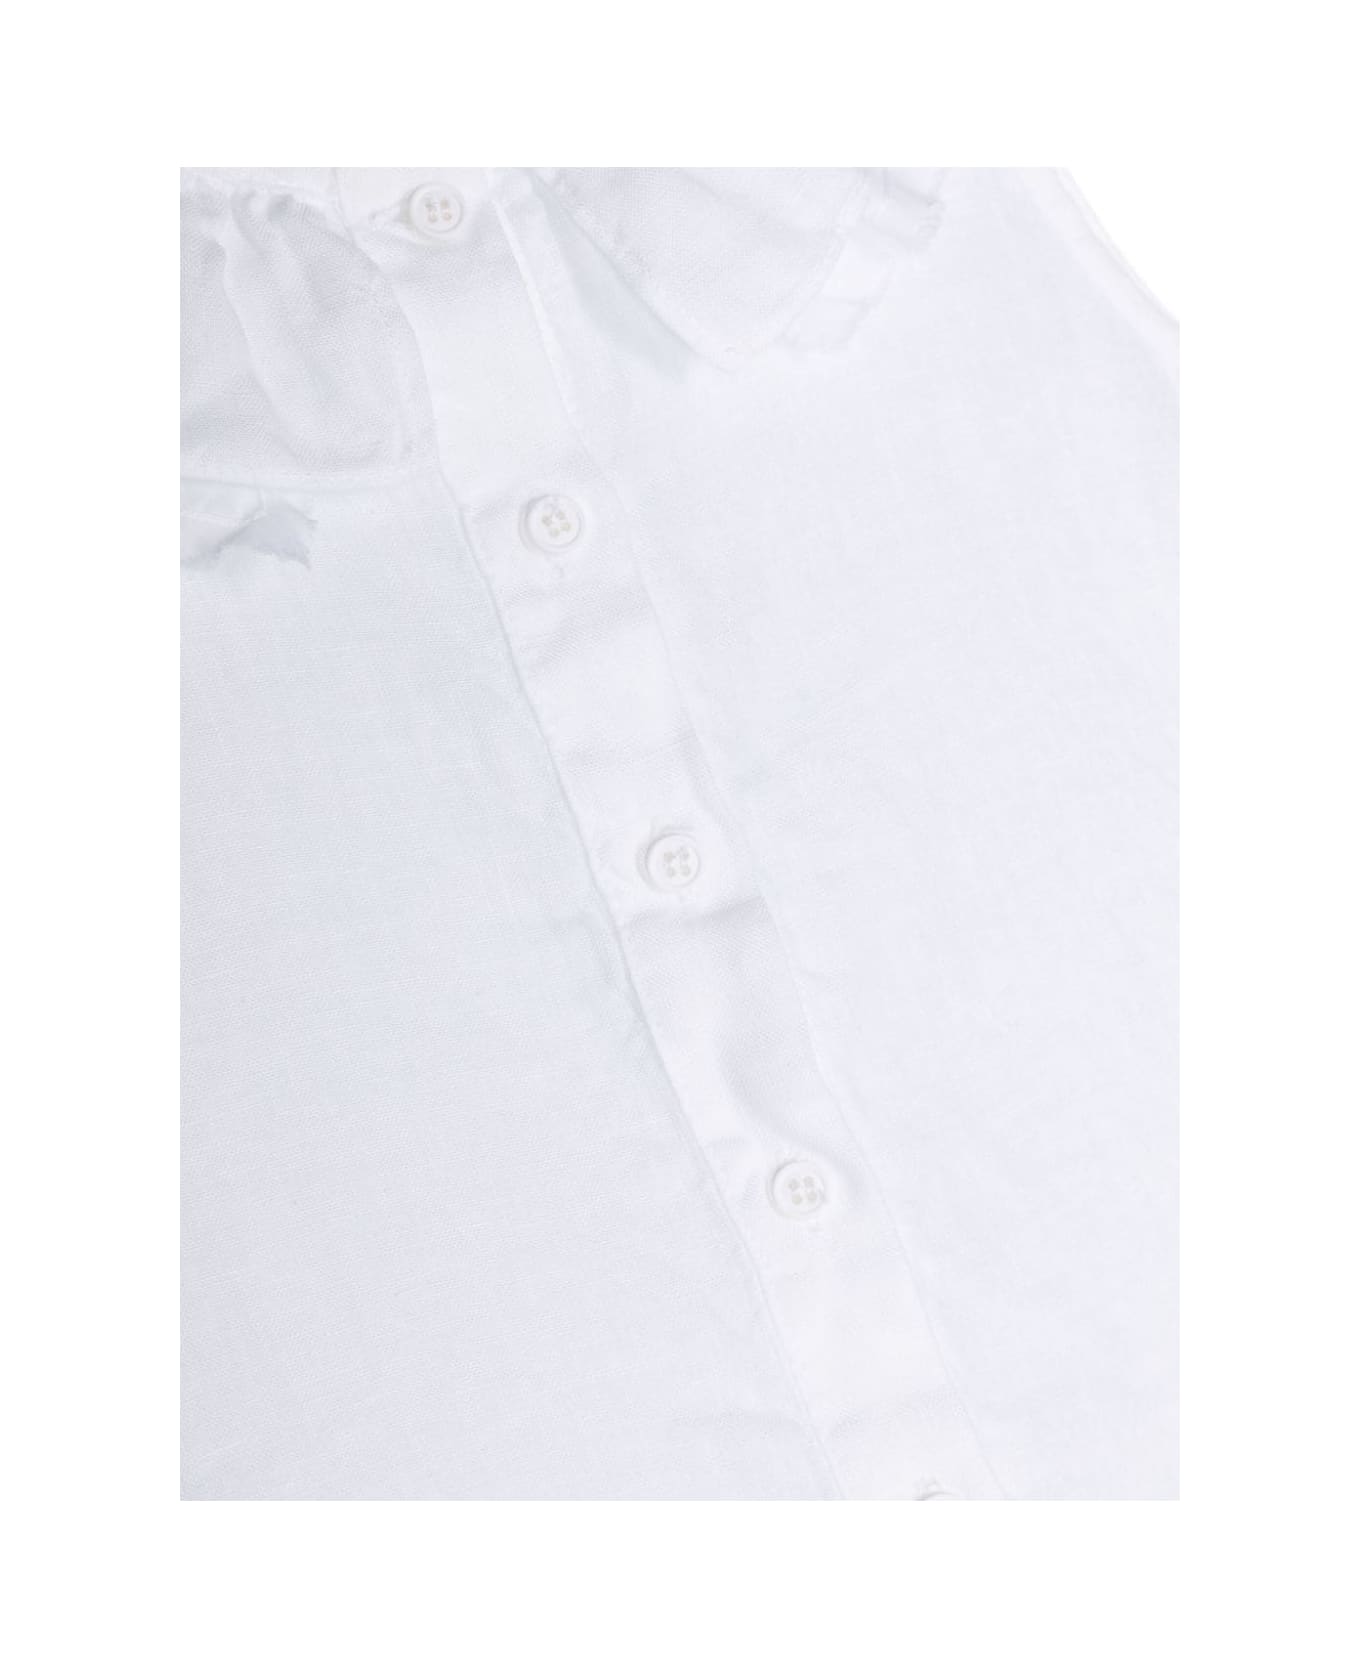 Il Gufo White Linen Dress With Ruffle Around Neck - White